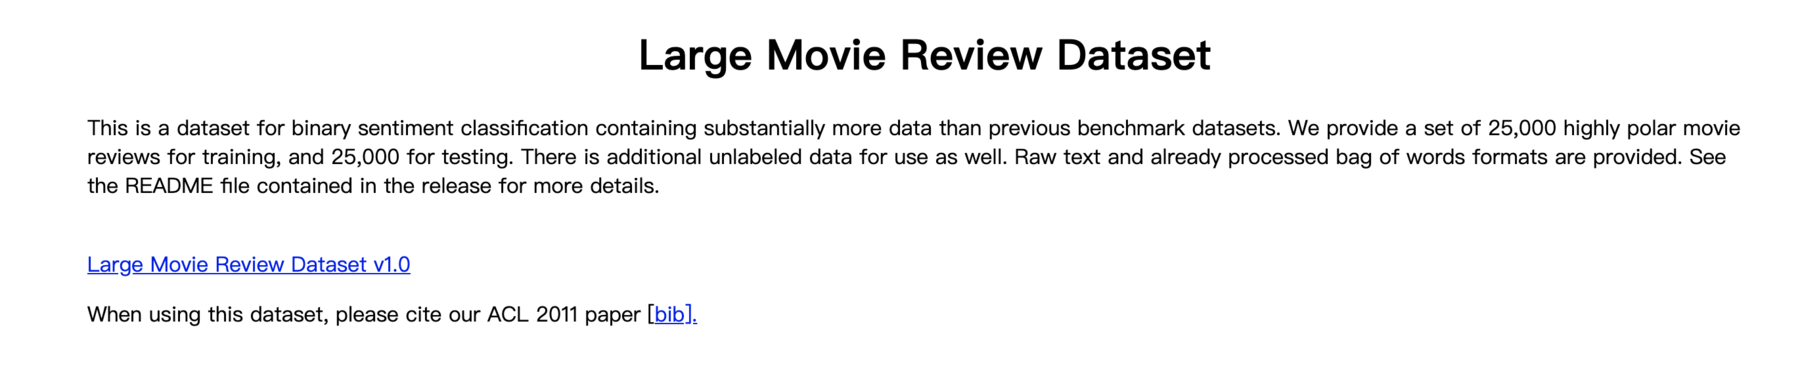 movie review dataset csv